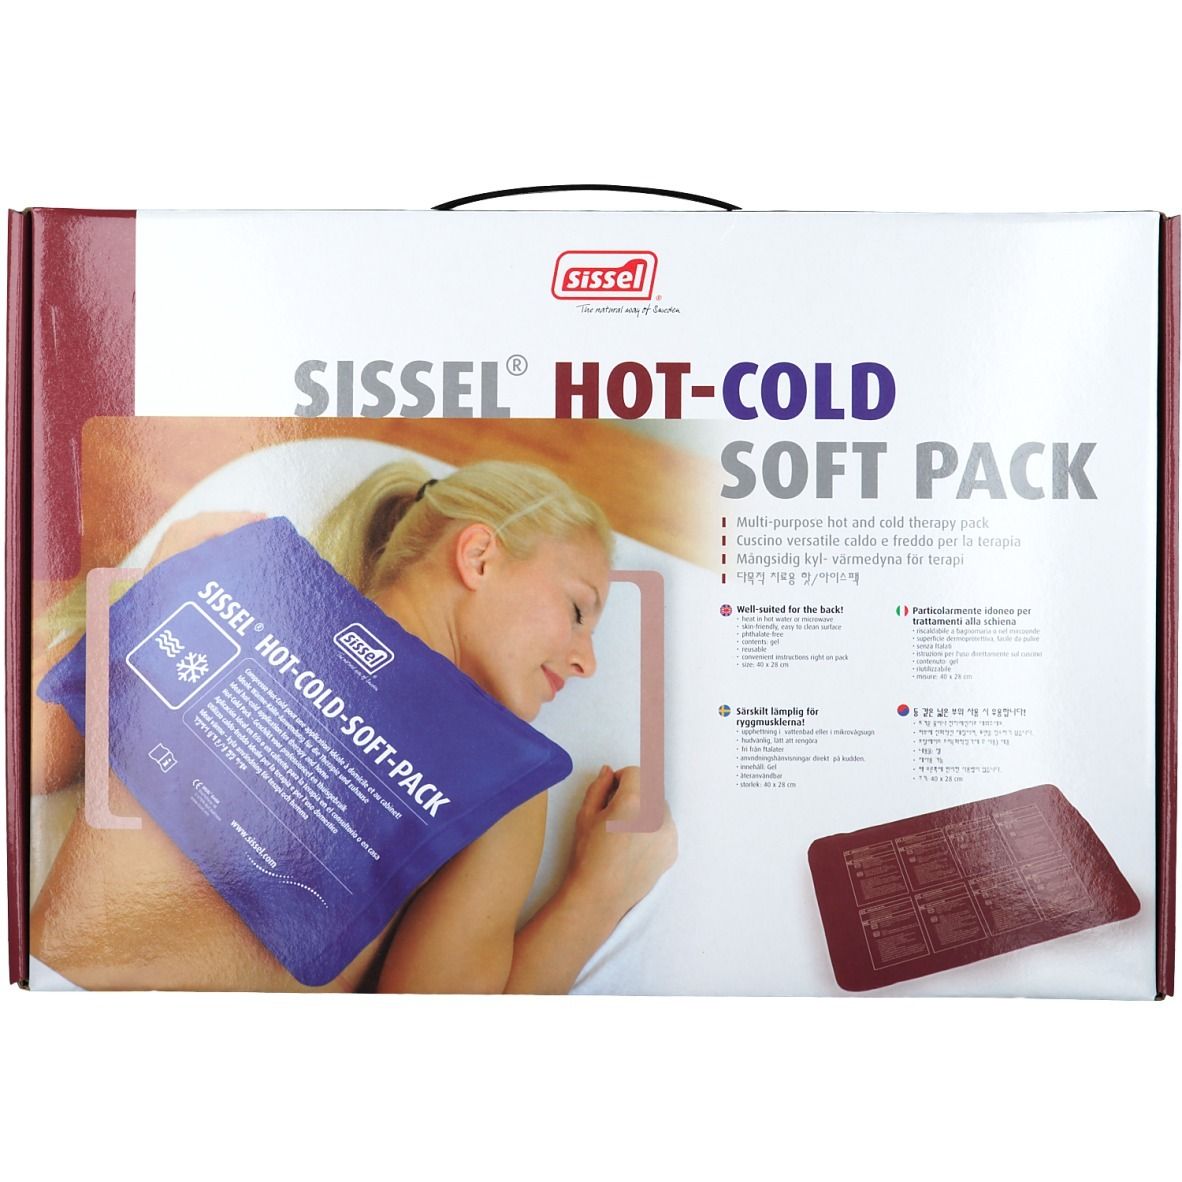 Sissel® Hot-Cold Soft Pack